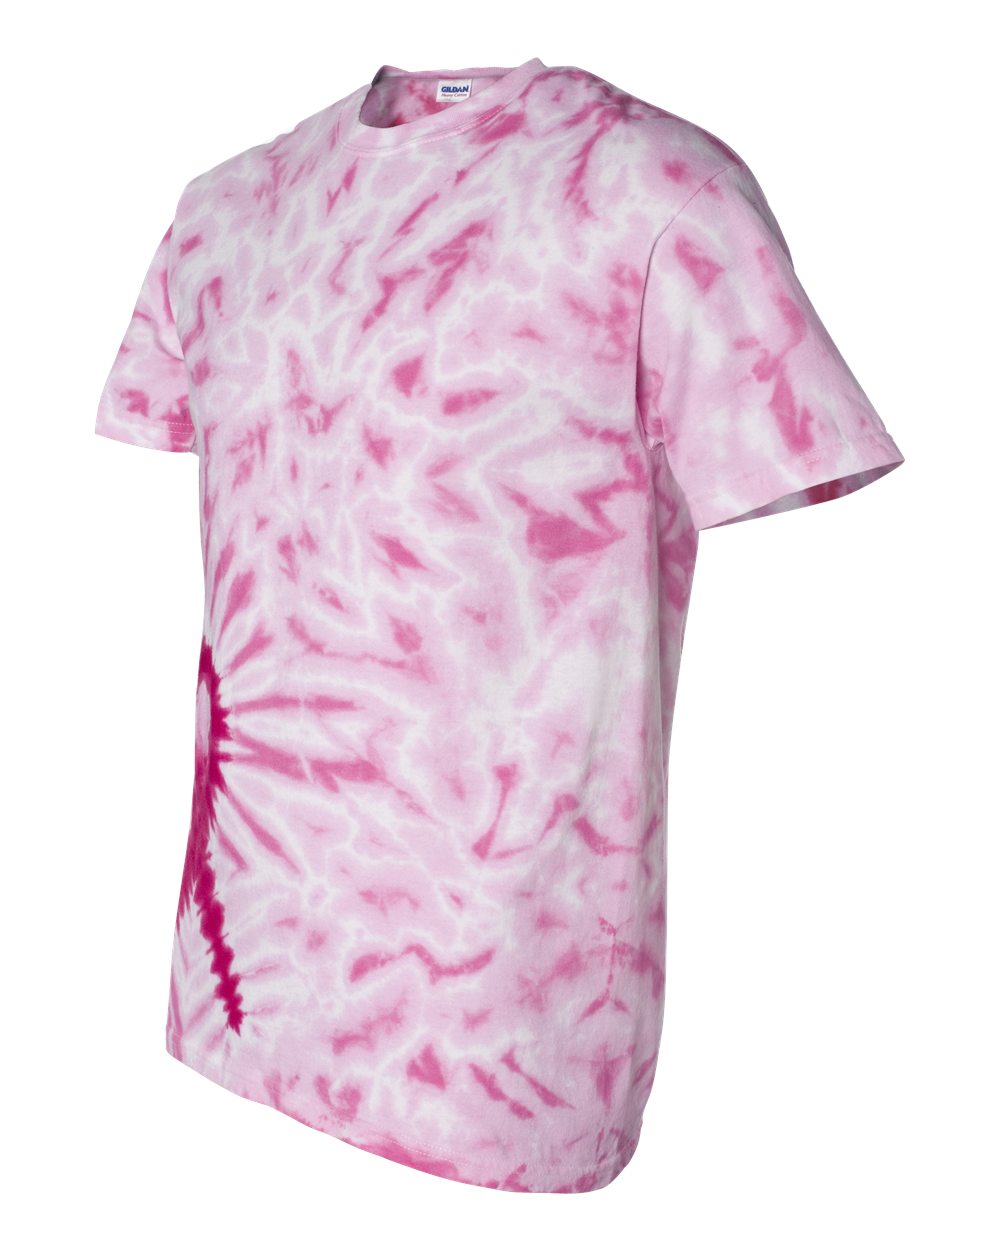 Dyenomite - Awareness Ribbon Tie-Dyed T-Shirt